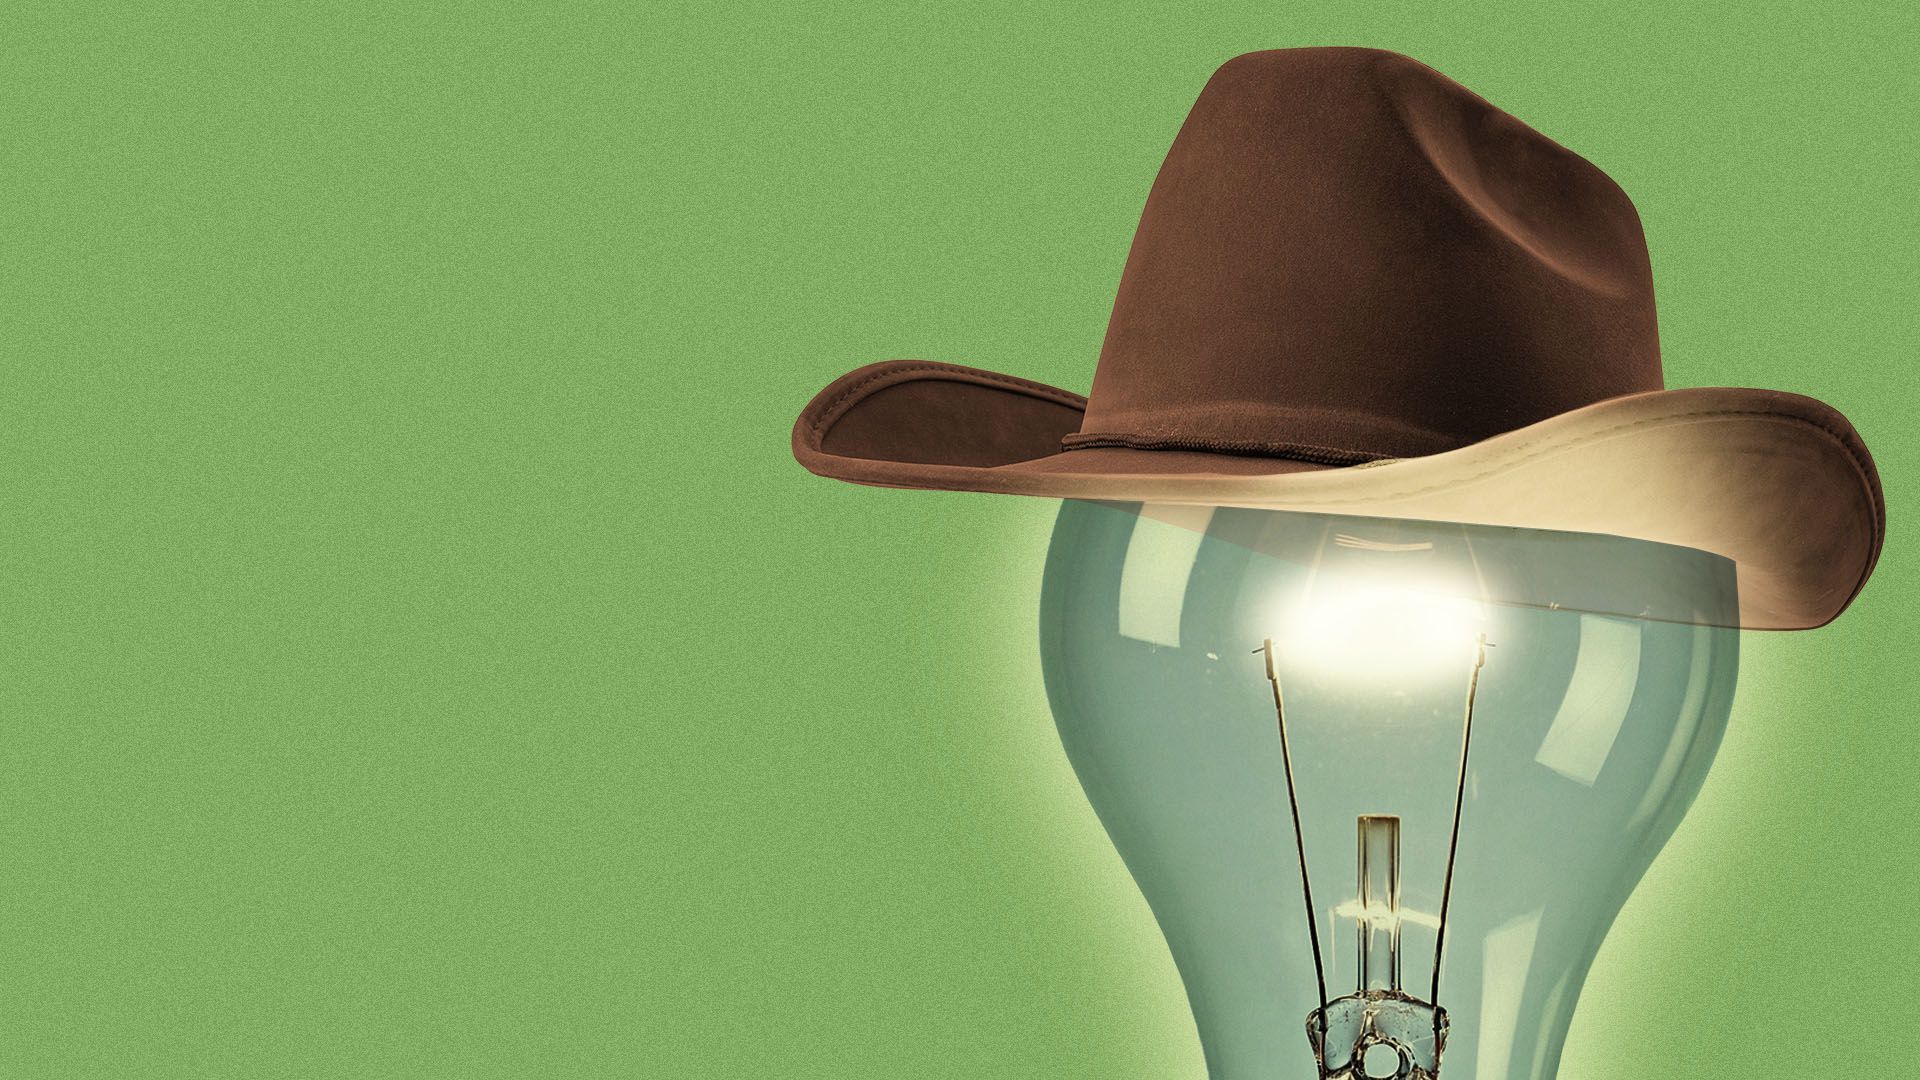 Illustration of a light bulb wearing a cowboy hat